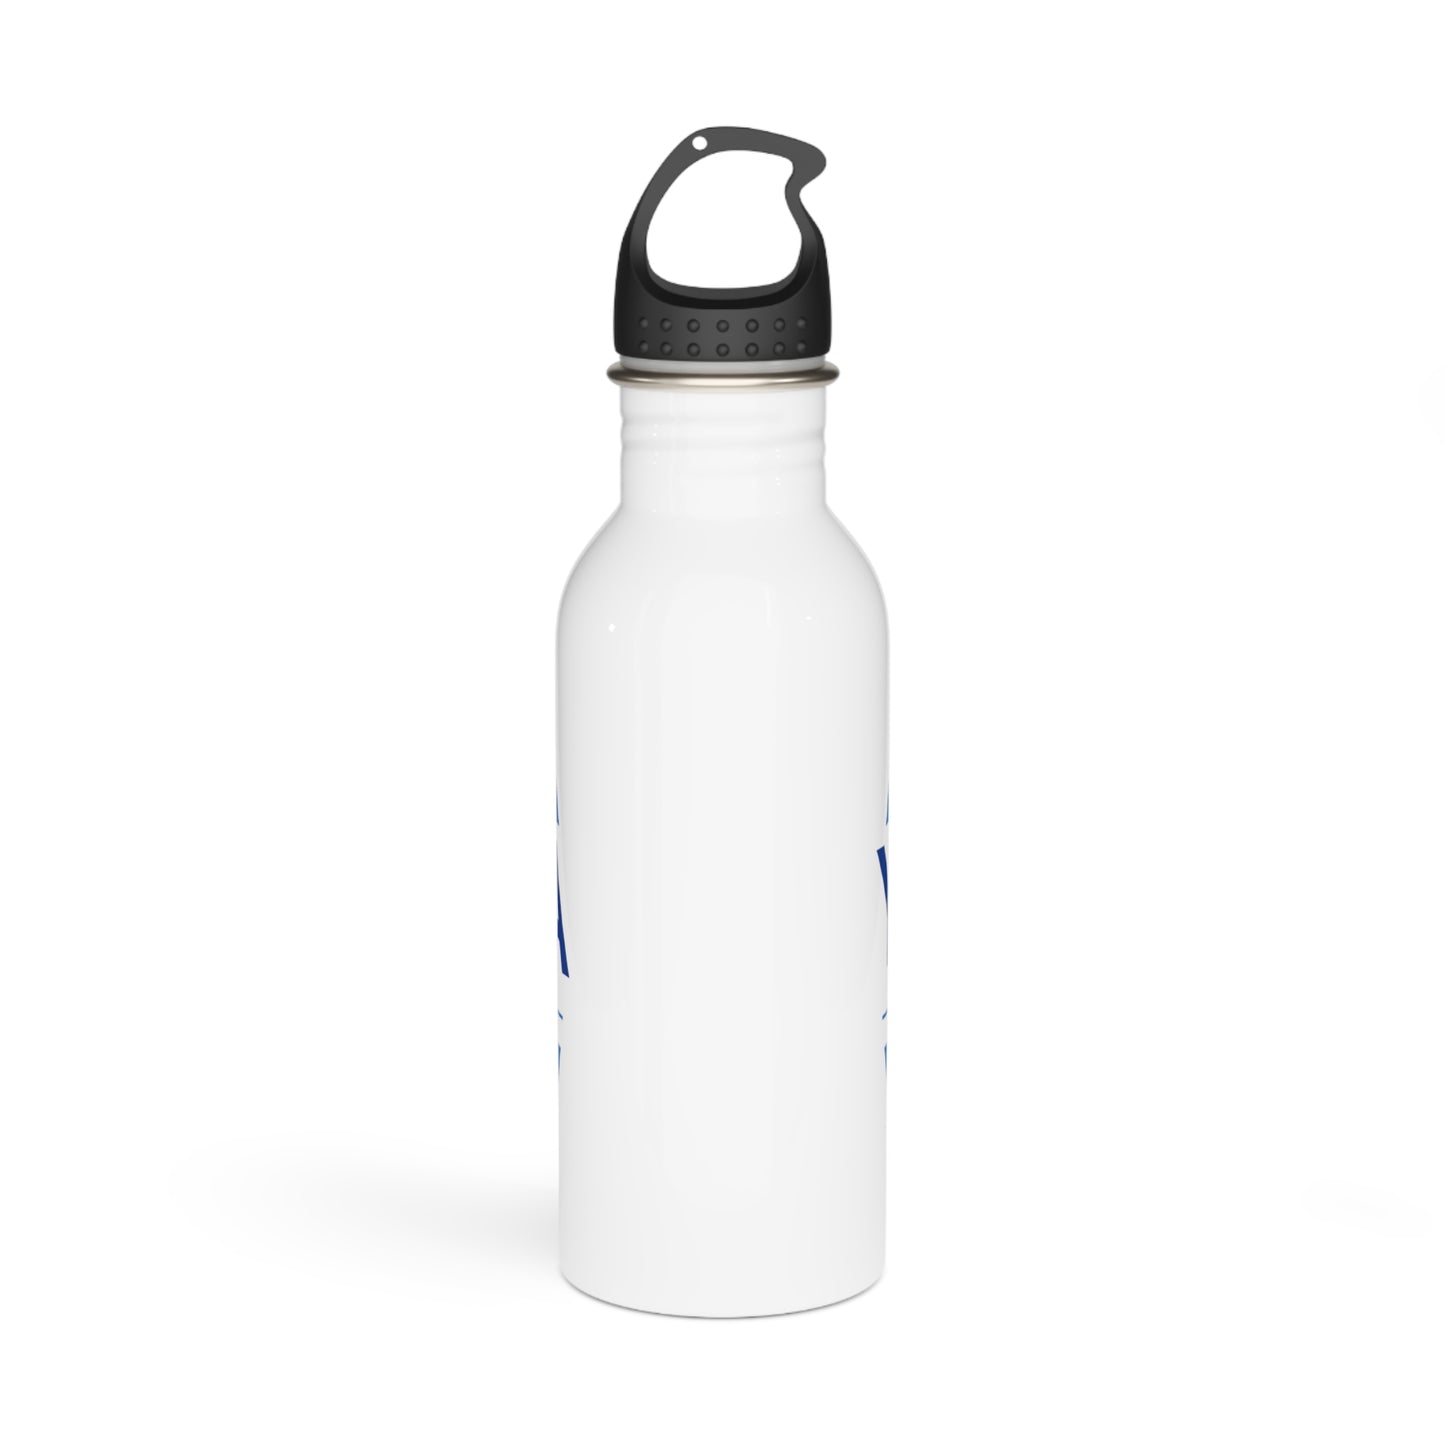 YEG Stainless Steel Water Bottle